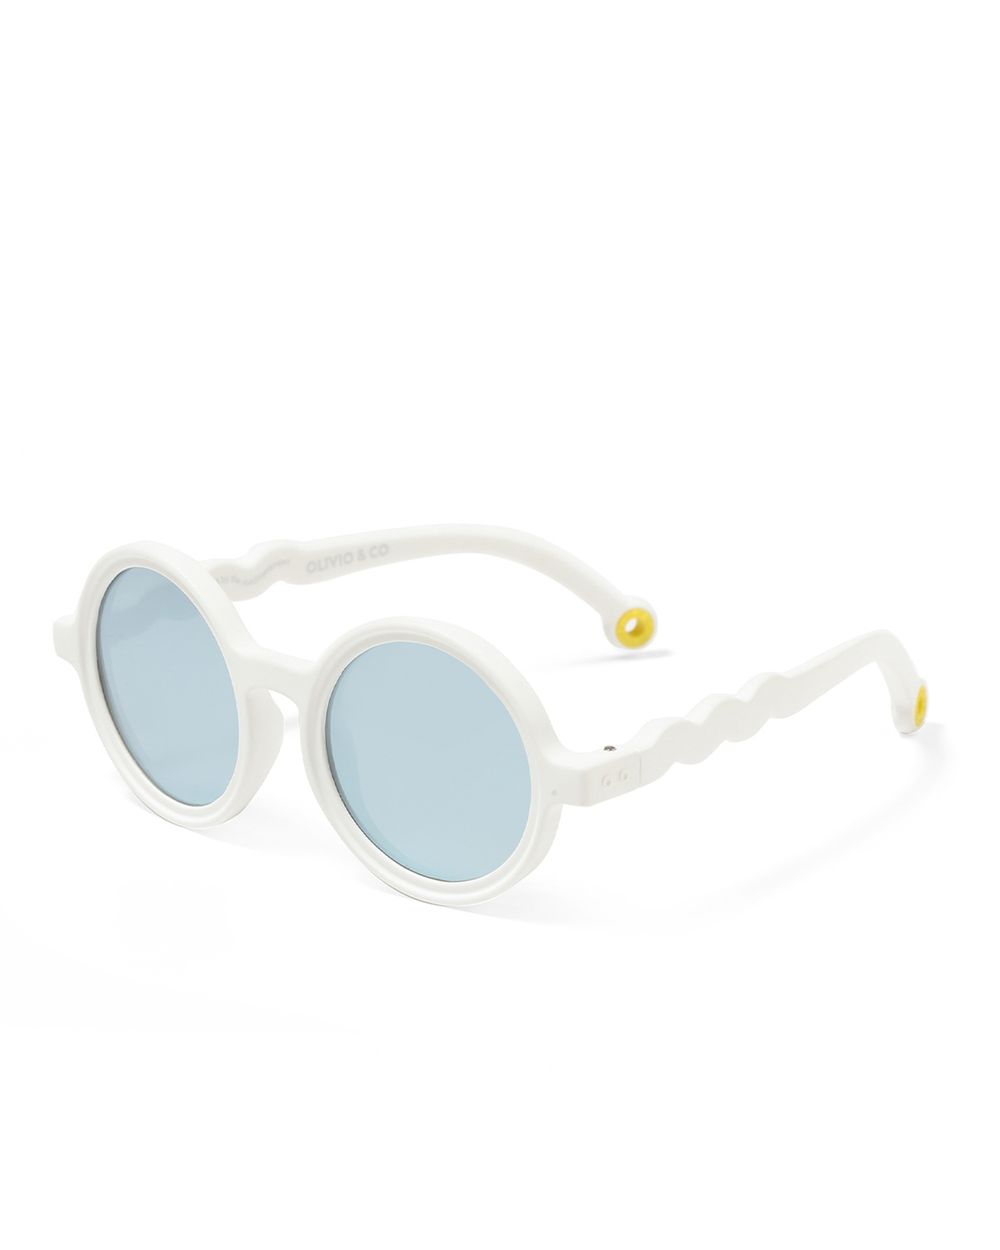 Toddler Round Sunglasses Shark White